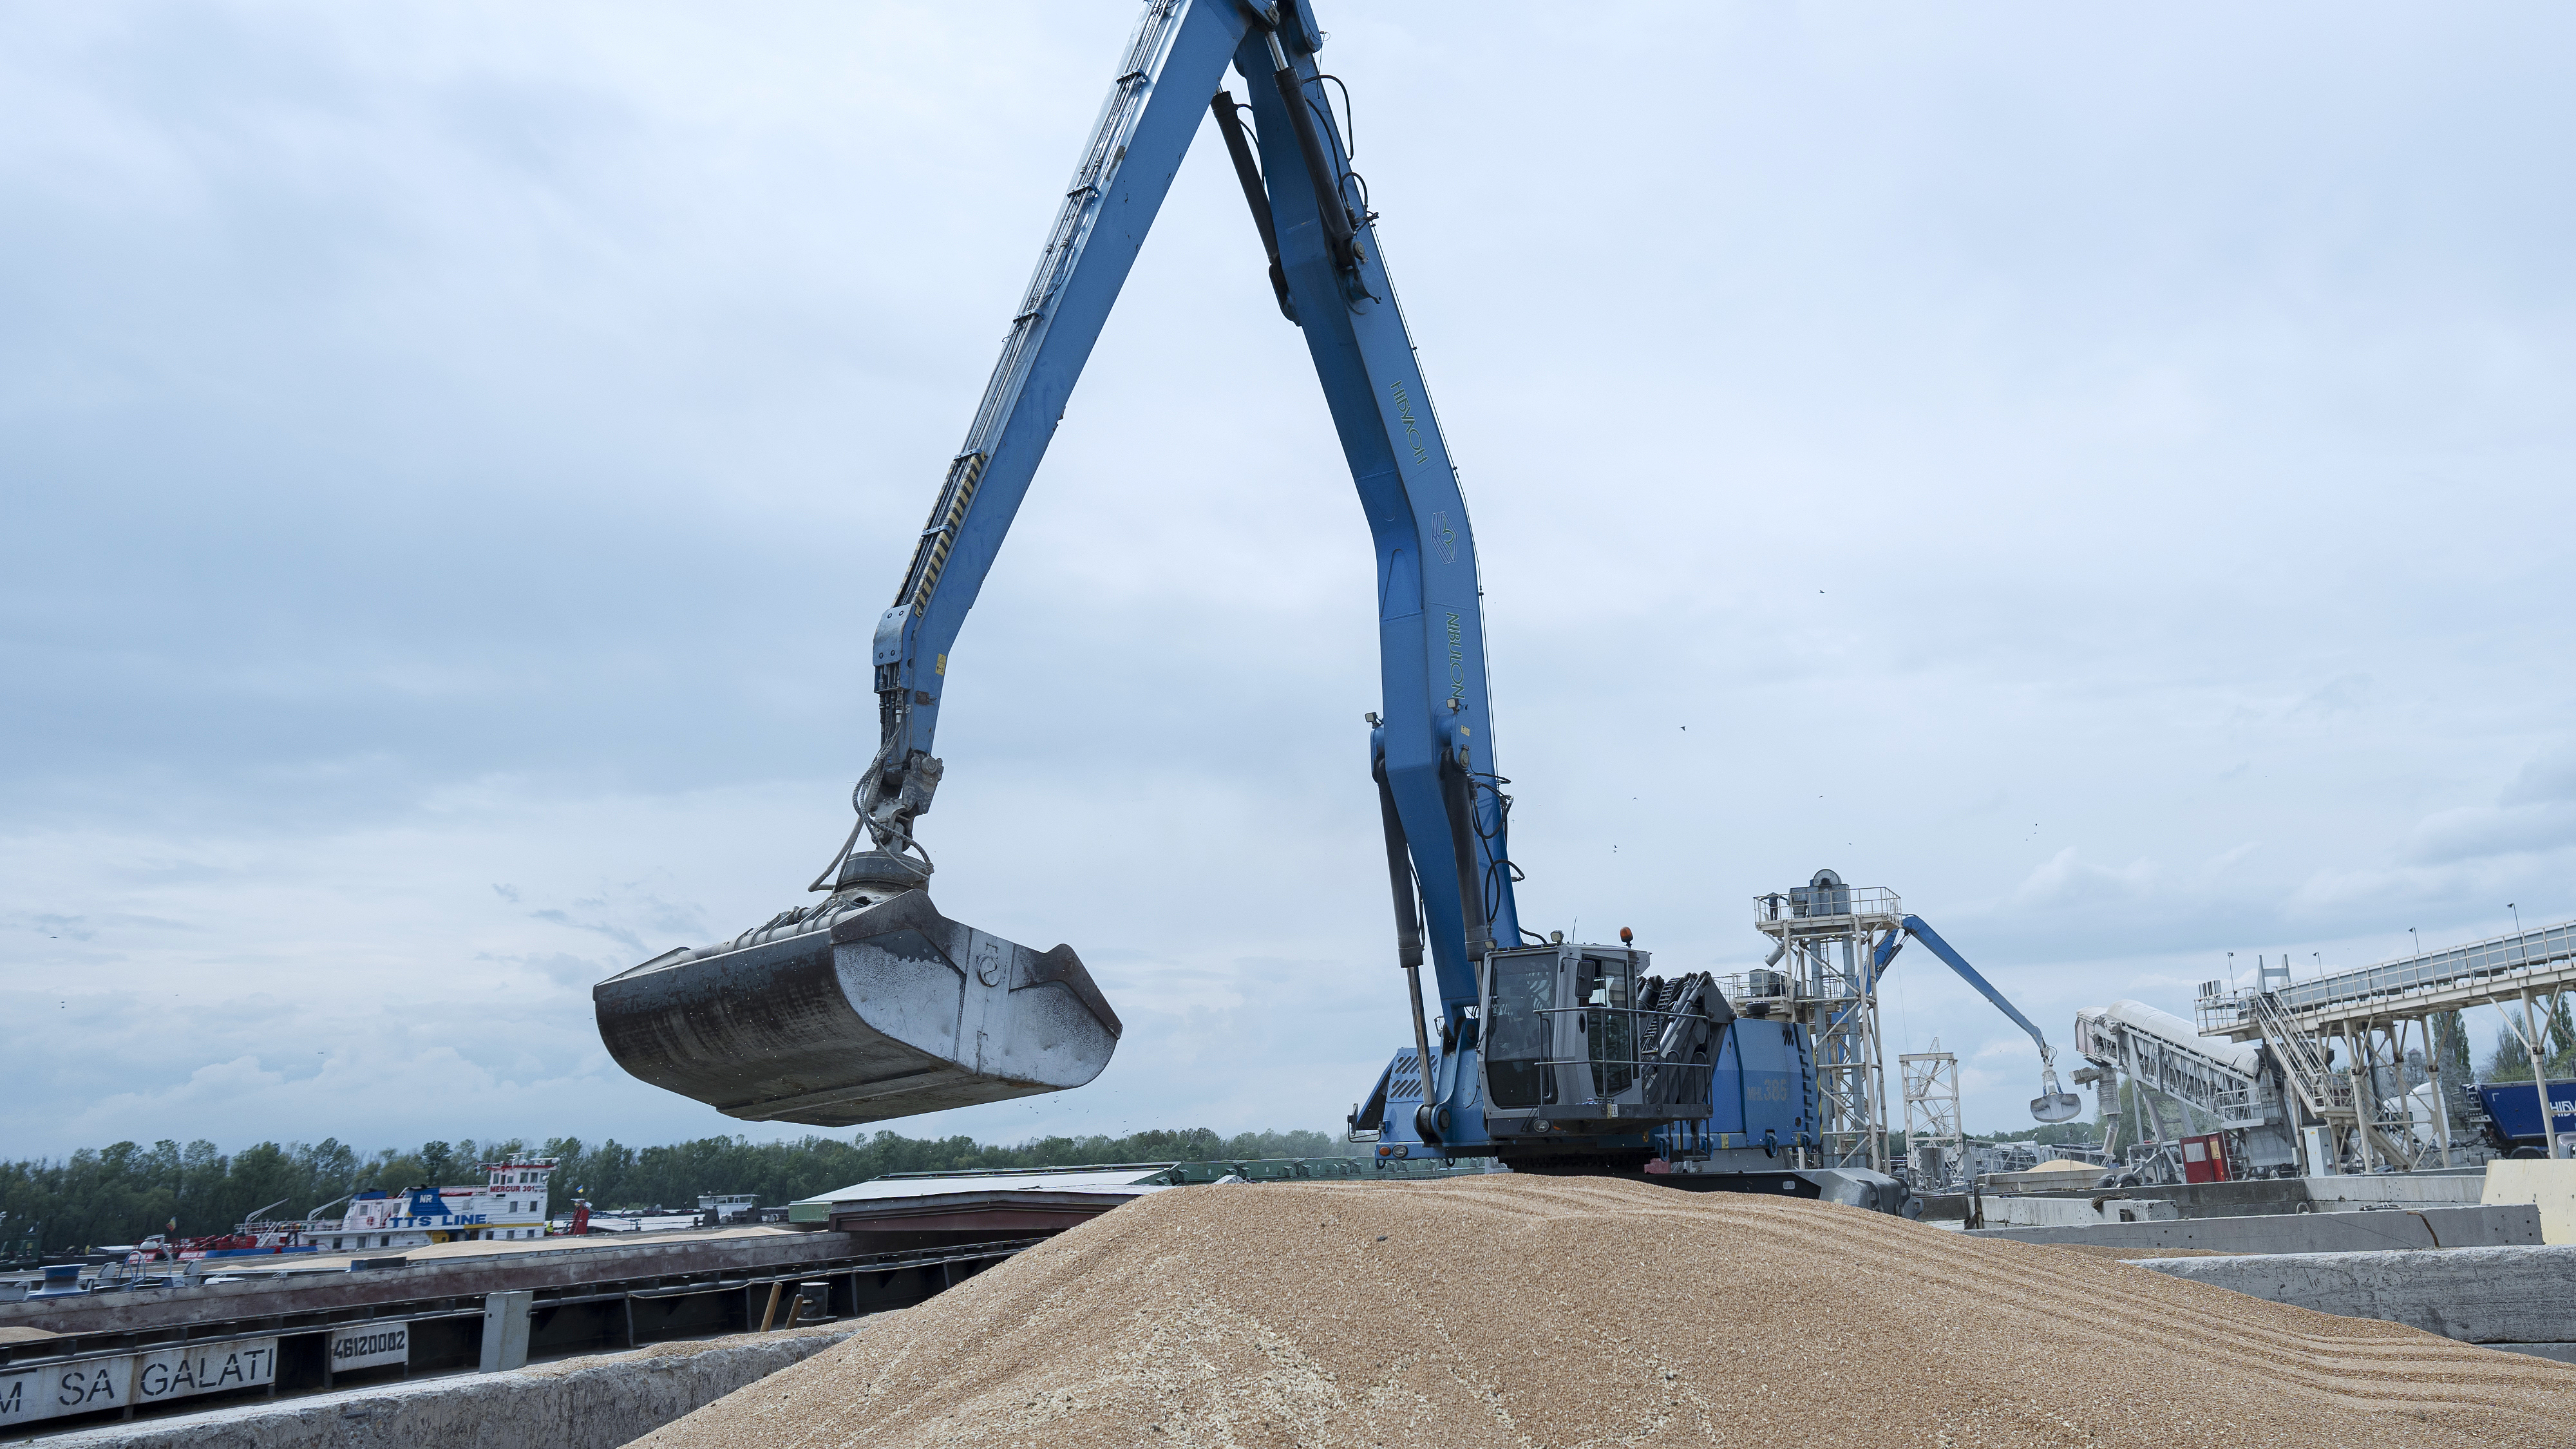 An excavator loads grain into a cargo ship at a grain port in Izmail, Ukraine, April 26, 2023. /CFP